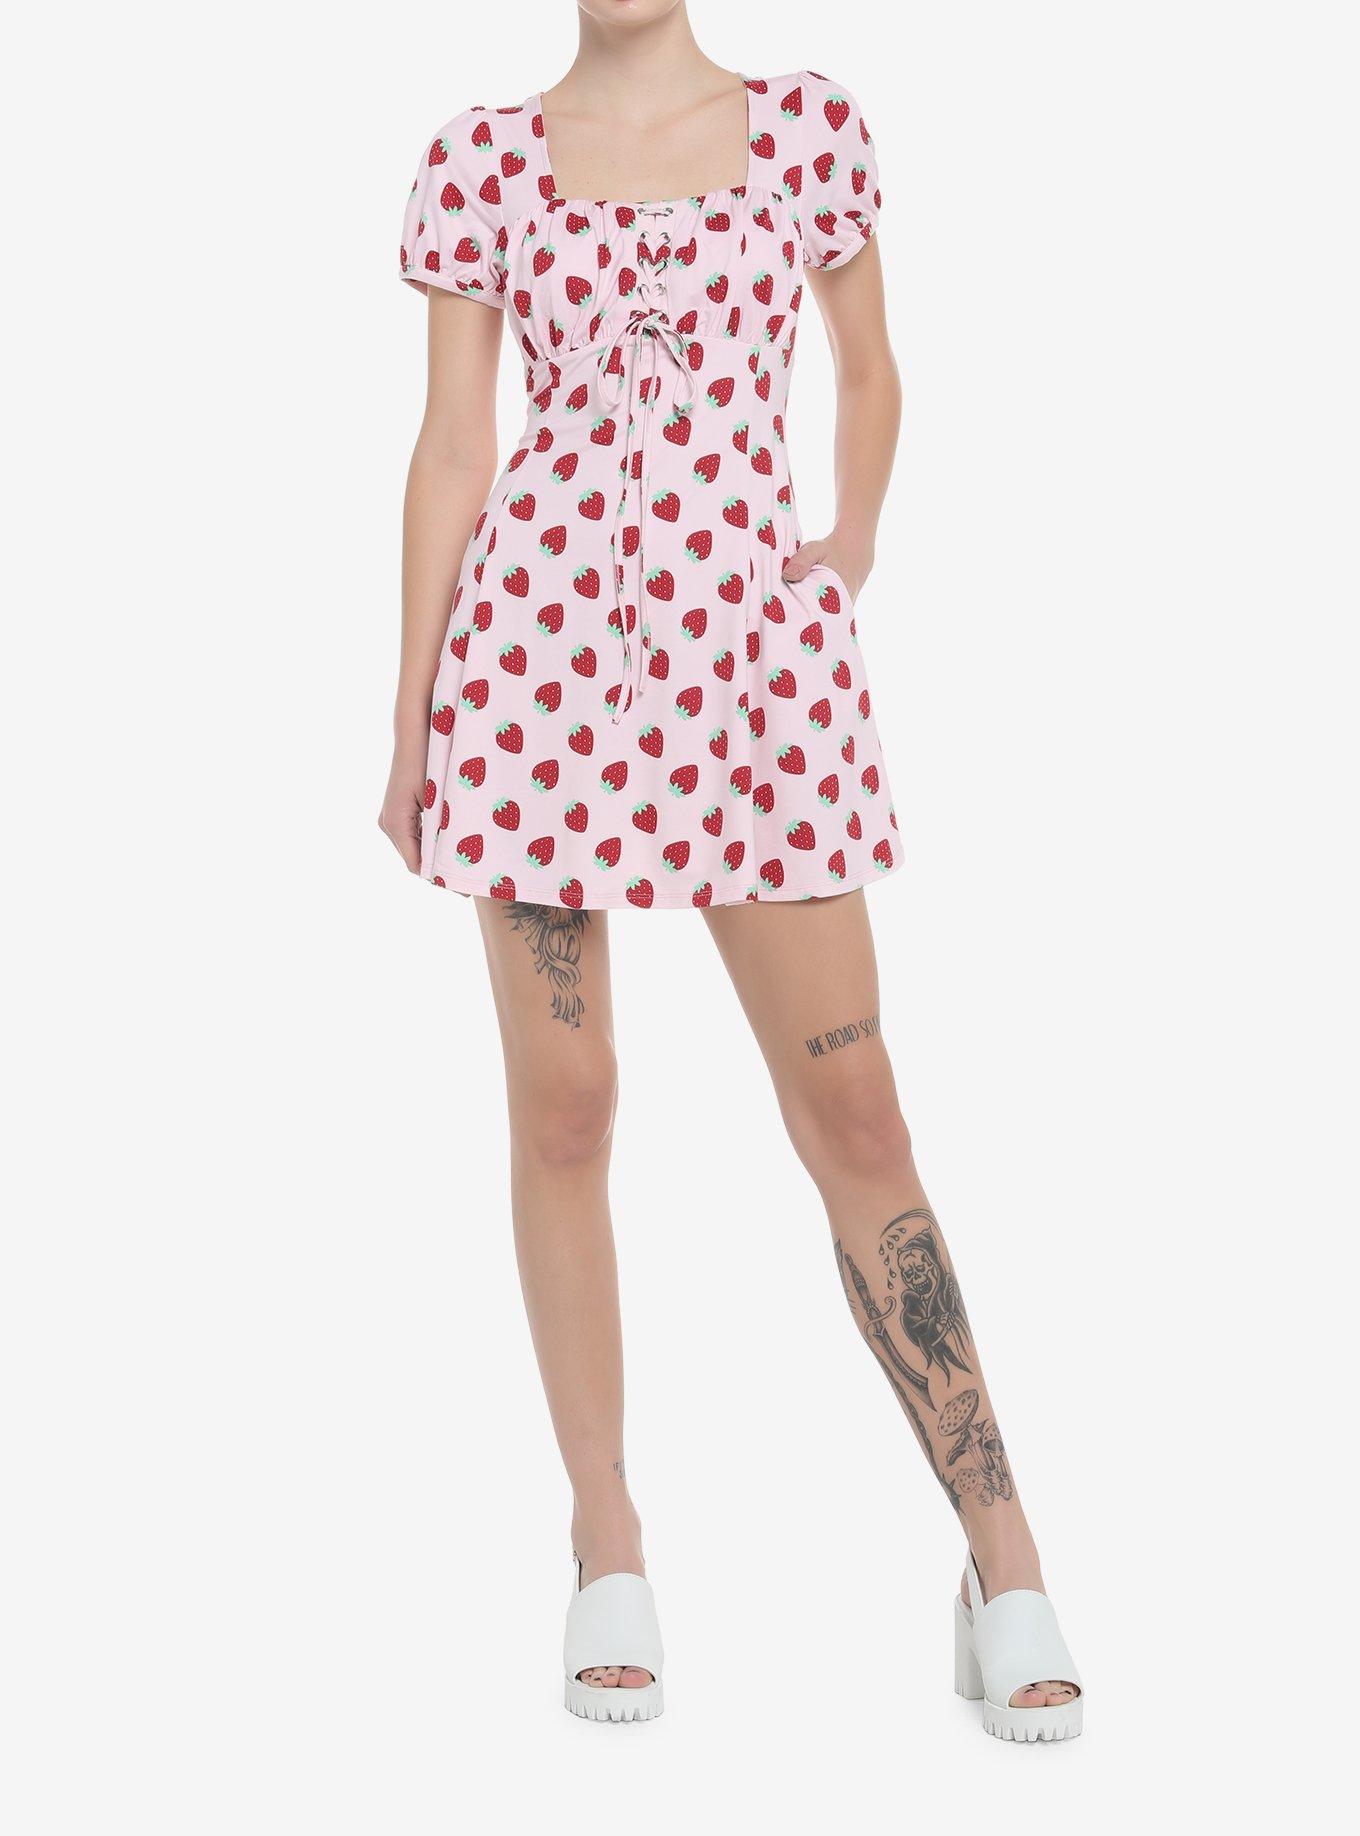 Strawberry Empire Waist Dress, PINK, alternate